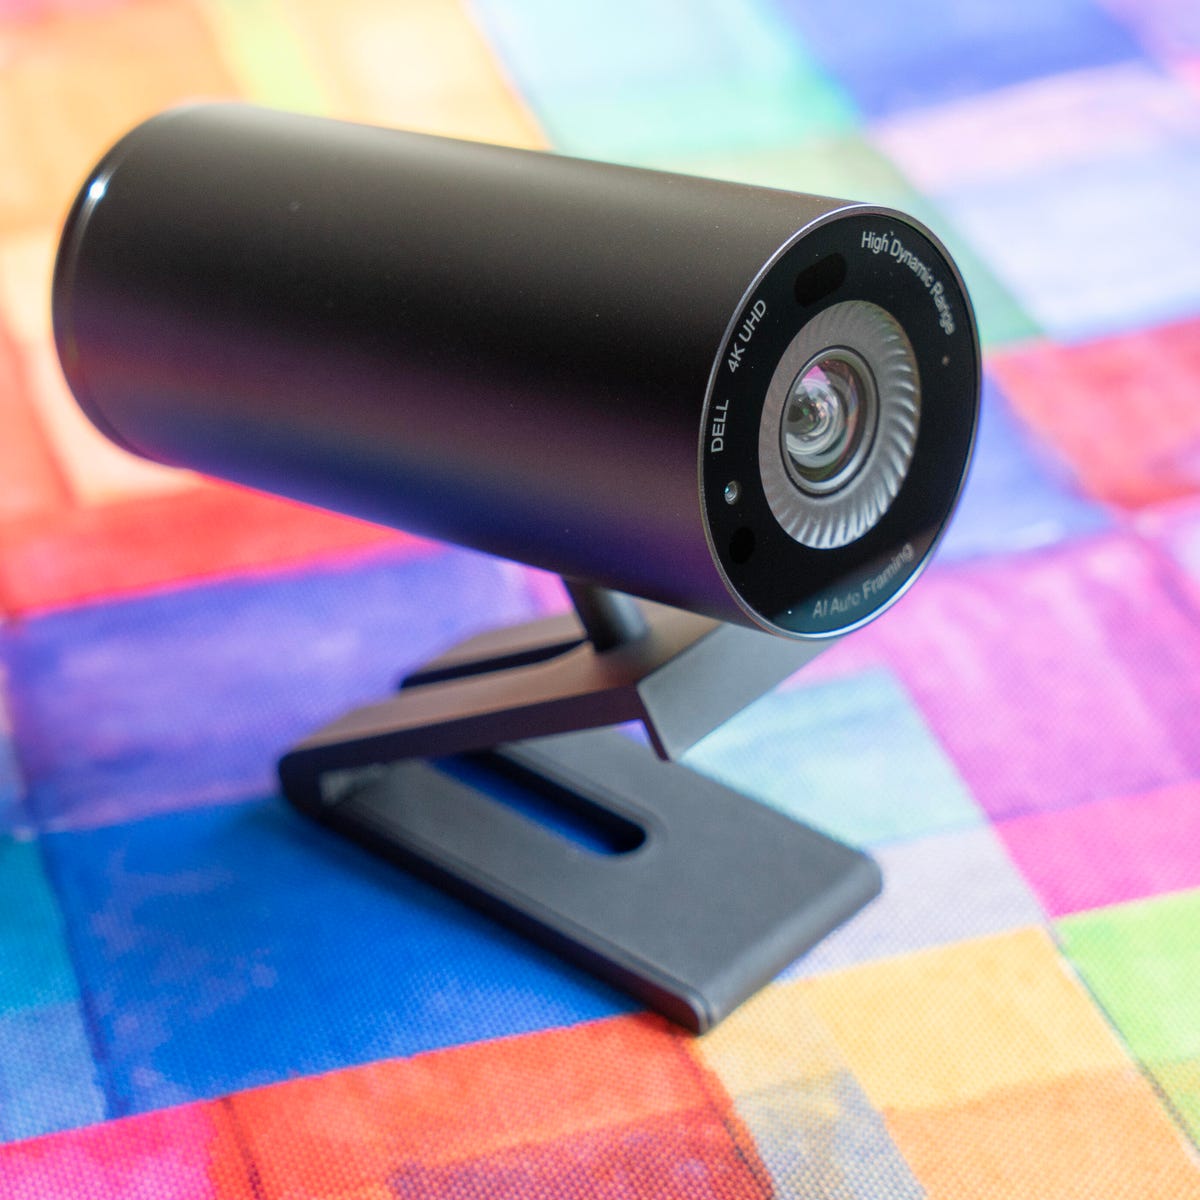 Dell 4K UltraSharp Webcam targets the Logitech Brio's spot - CNET